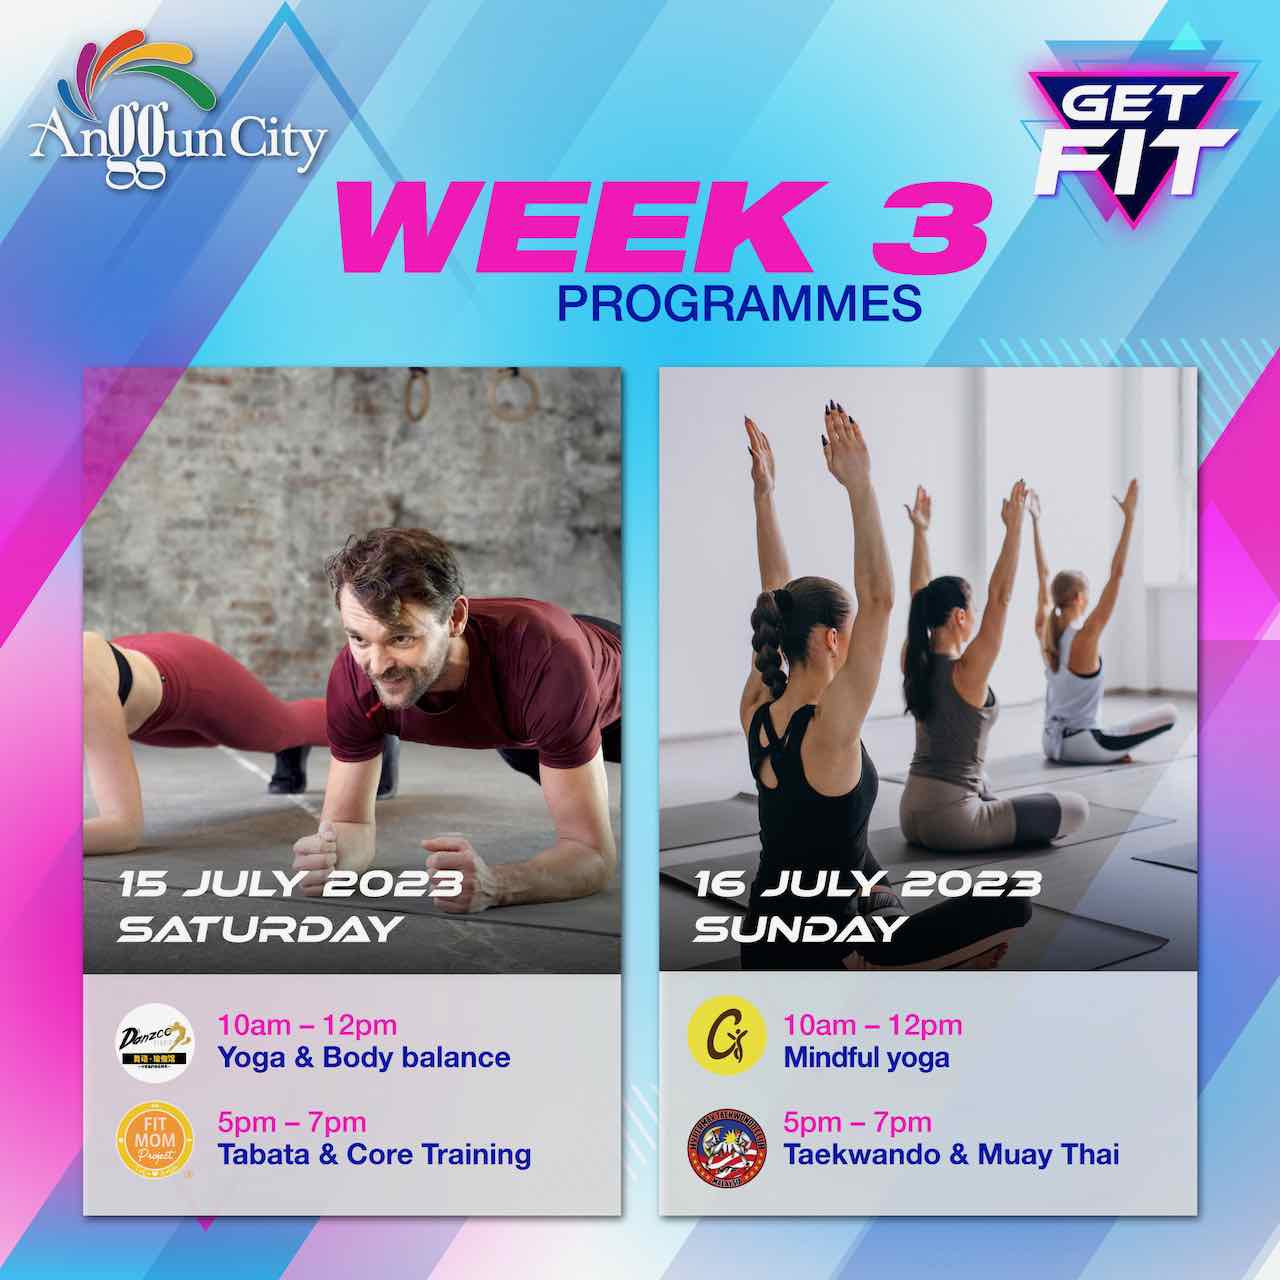 Get Fit Week 3 @ Anggun City